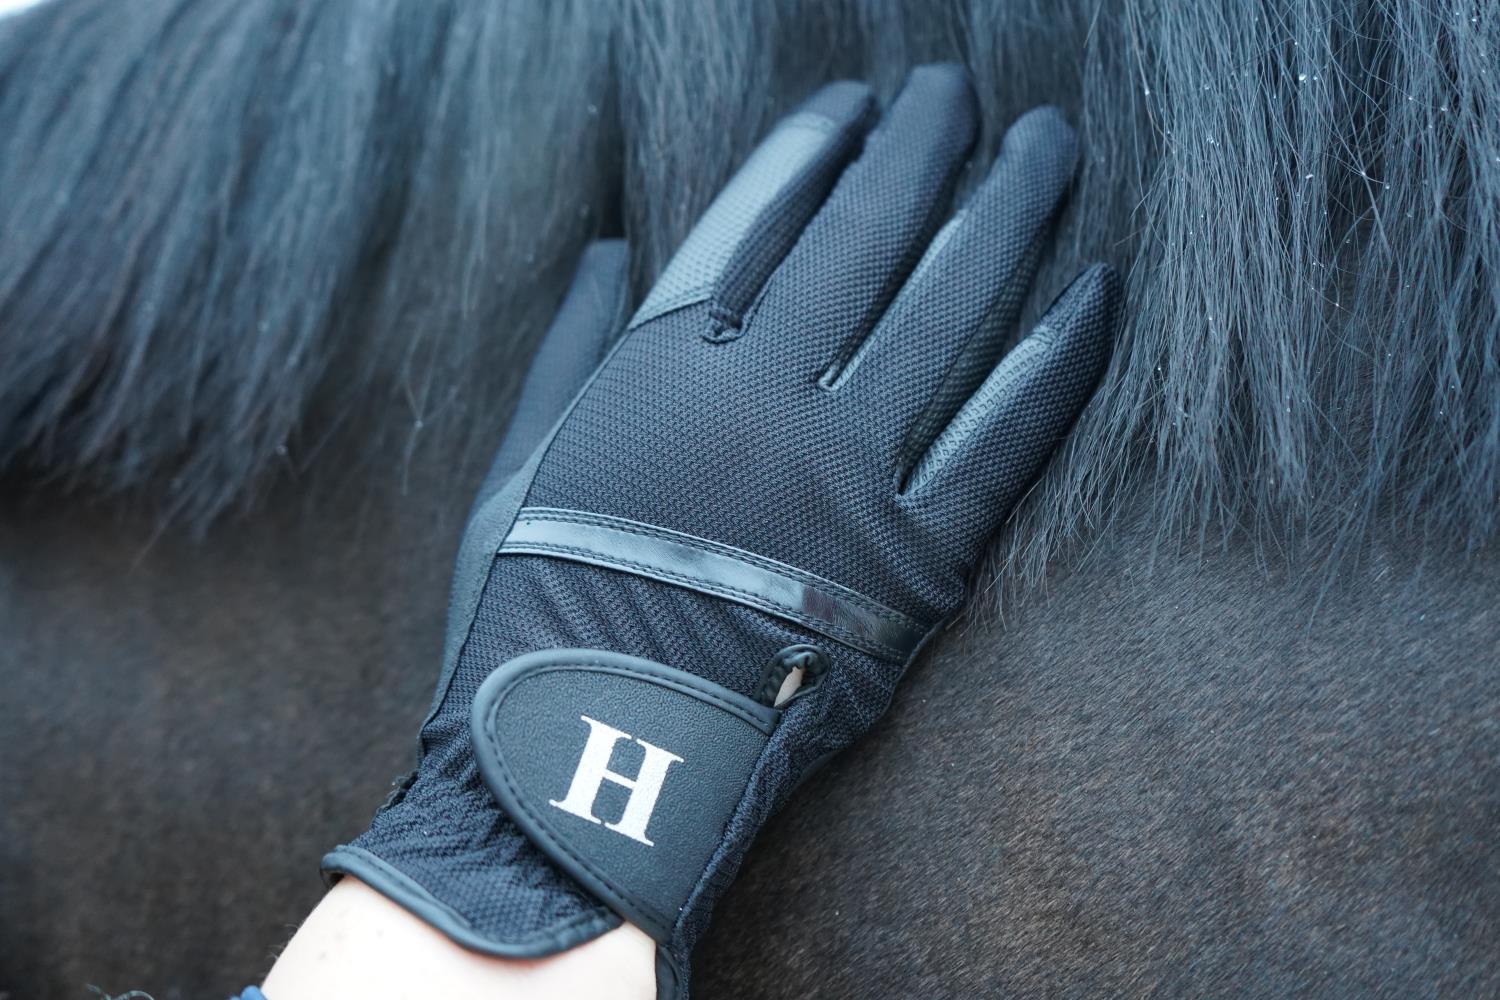 Hemilton Softgrip Riding Glove